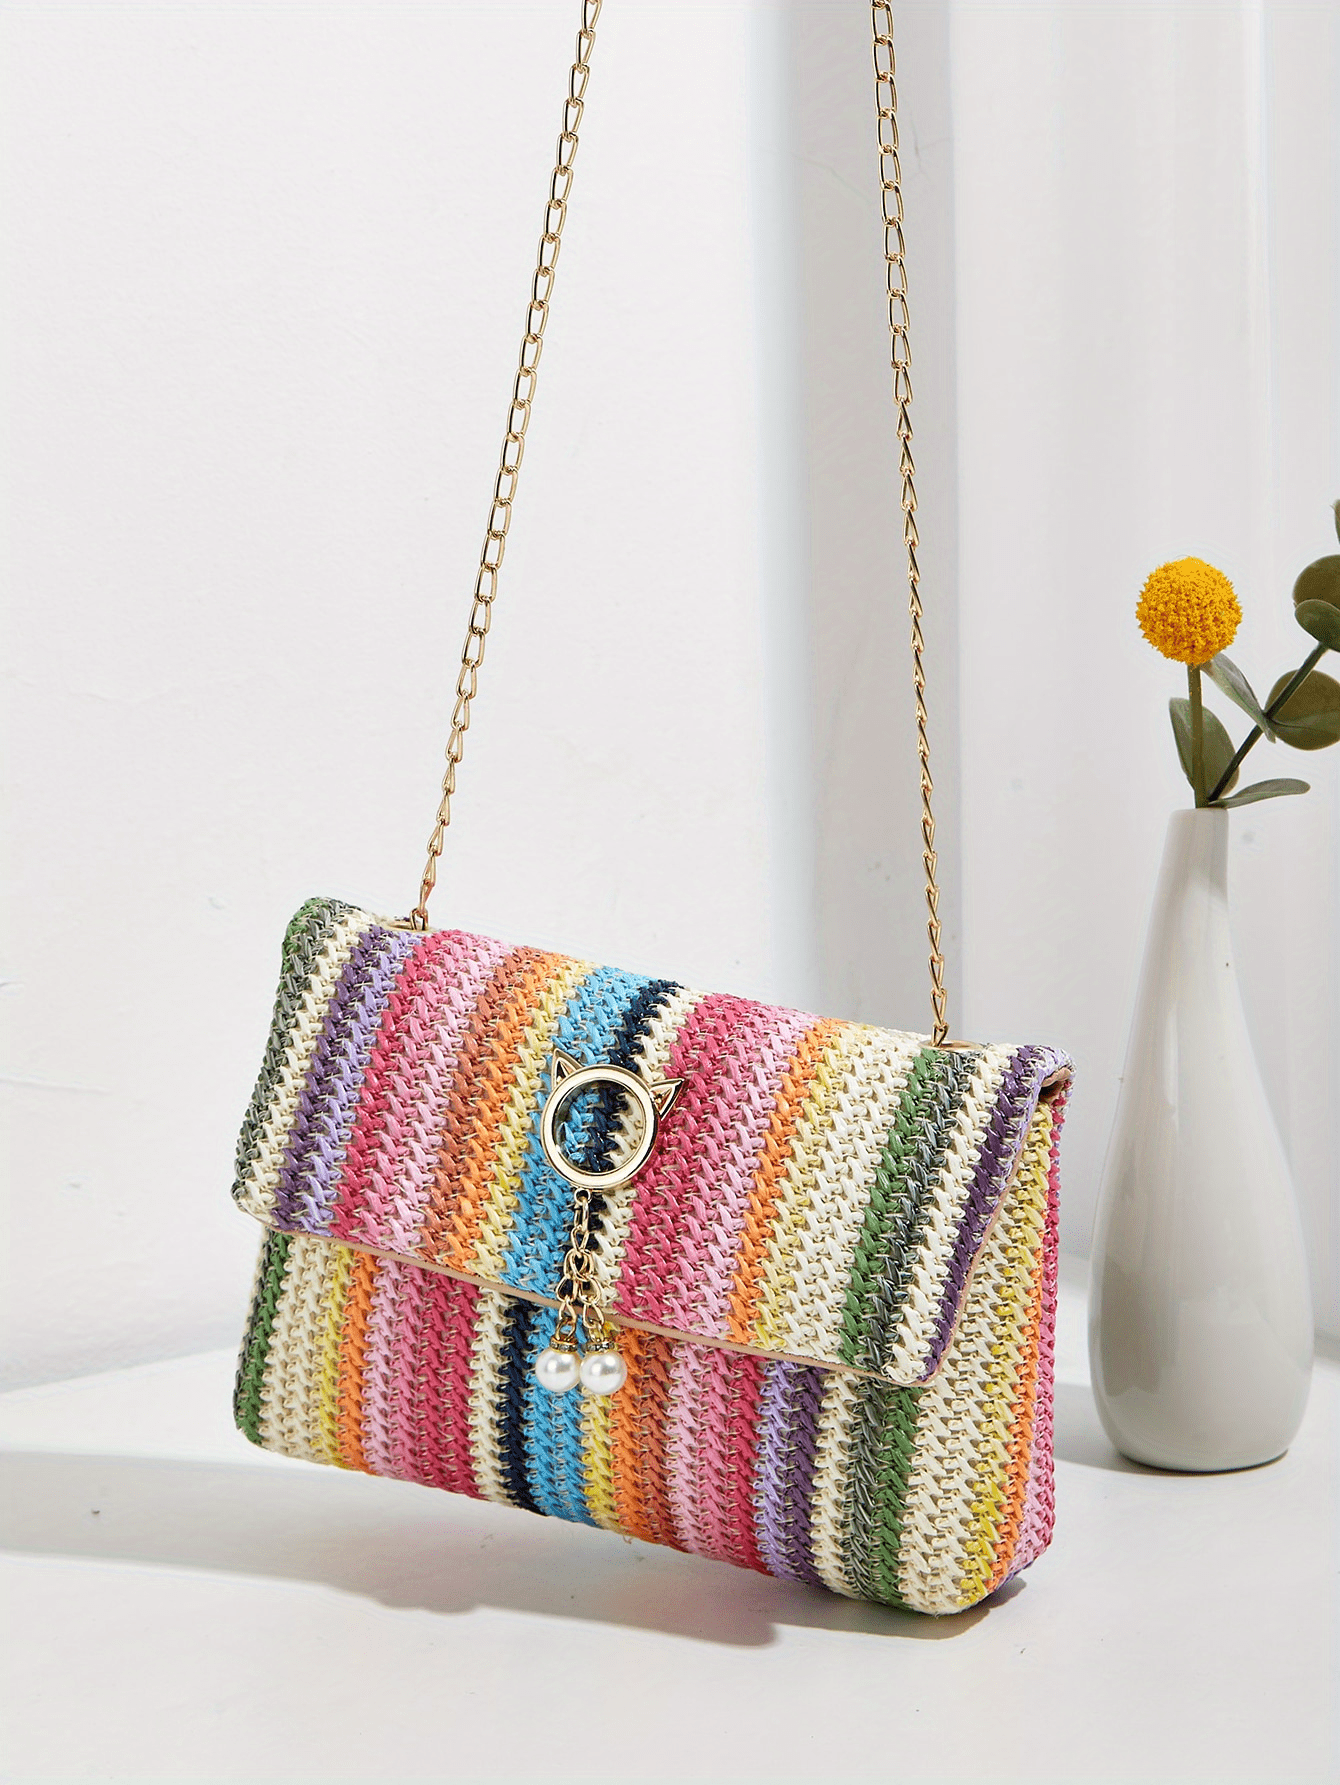 Multicolor Small Straw Crossbody Bag with Stripe Pattern, Chic Design